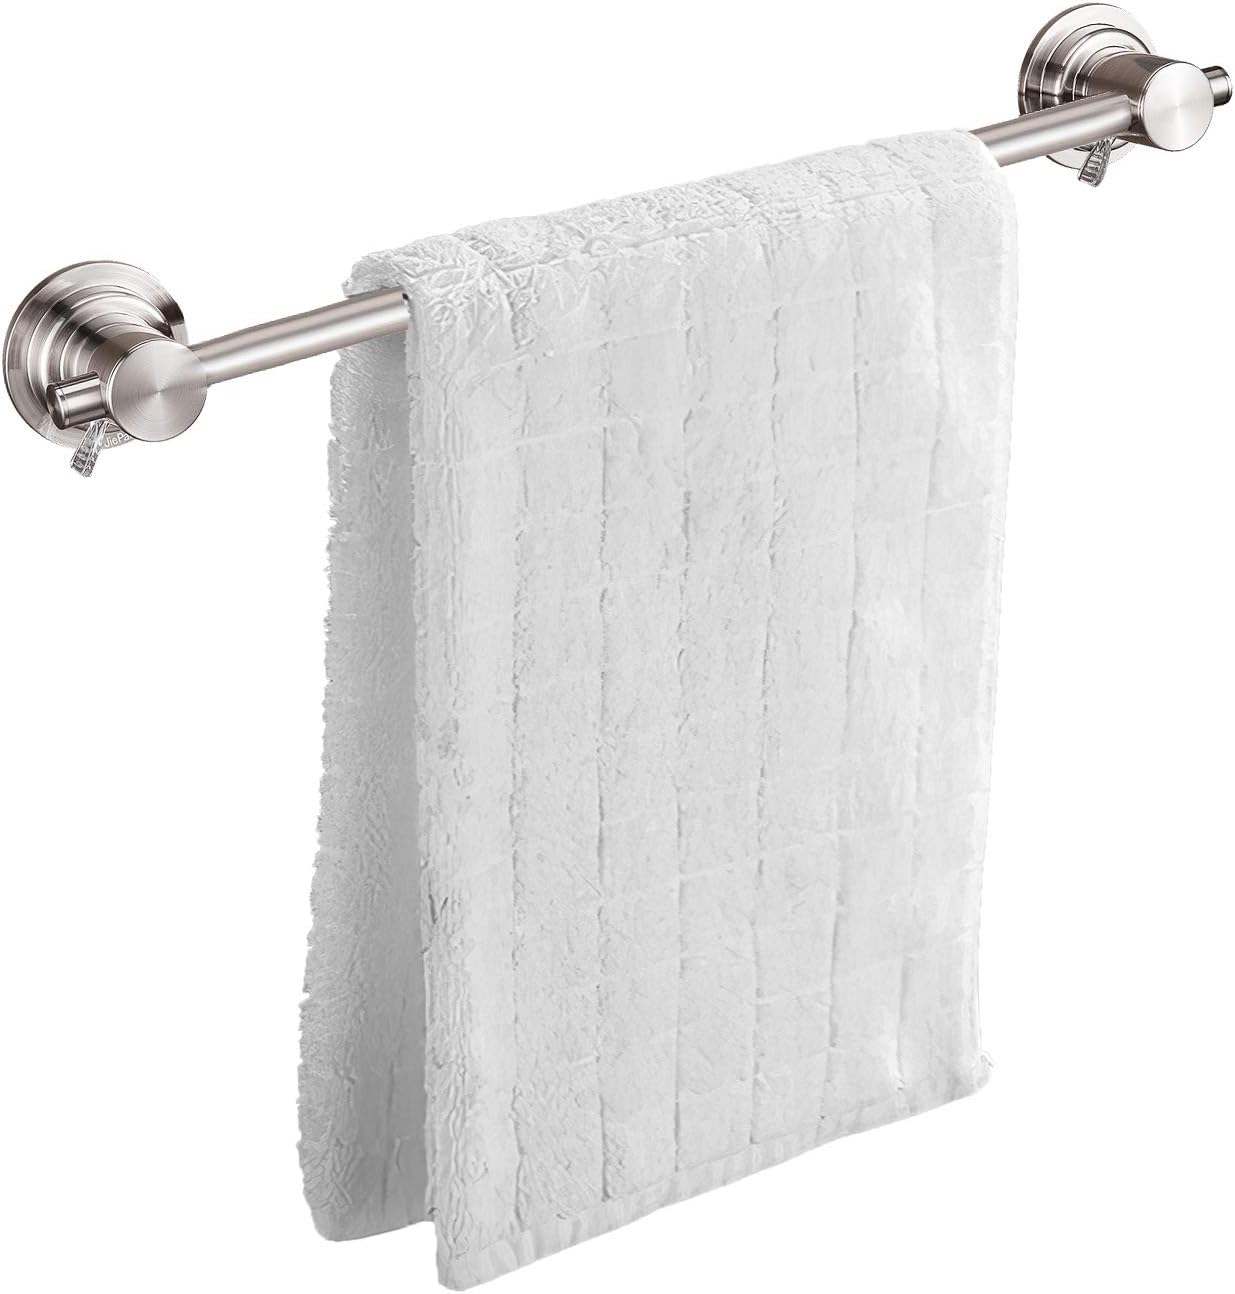 JiePai 24 inch Suction Cup Towel Bar Brushed Nickel,Bath Shower Towel Holder  Shower Door Adhesive